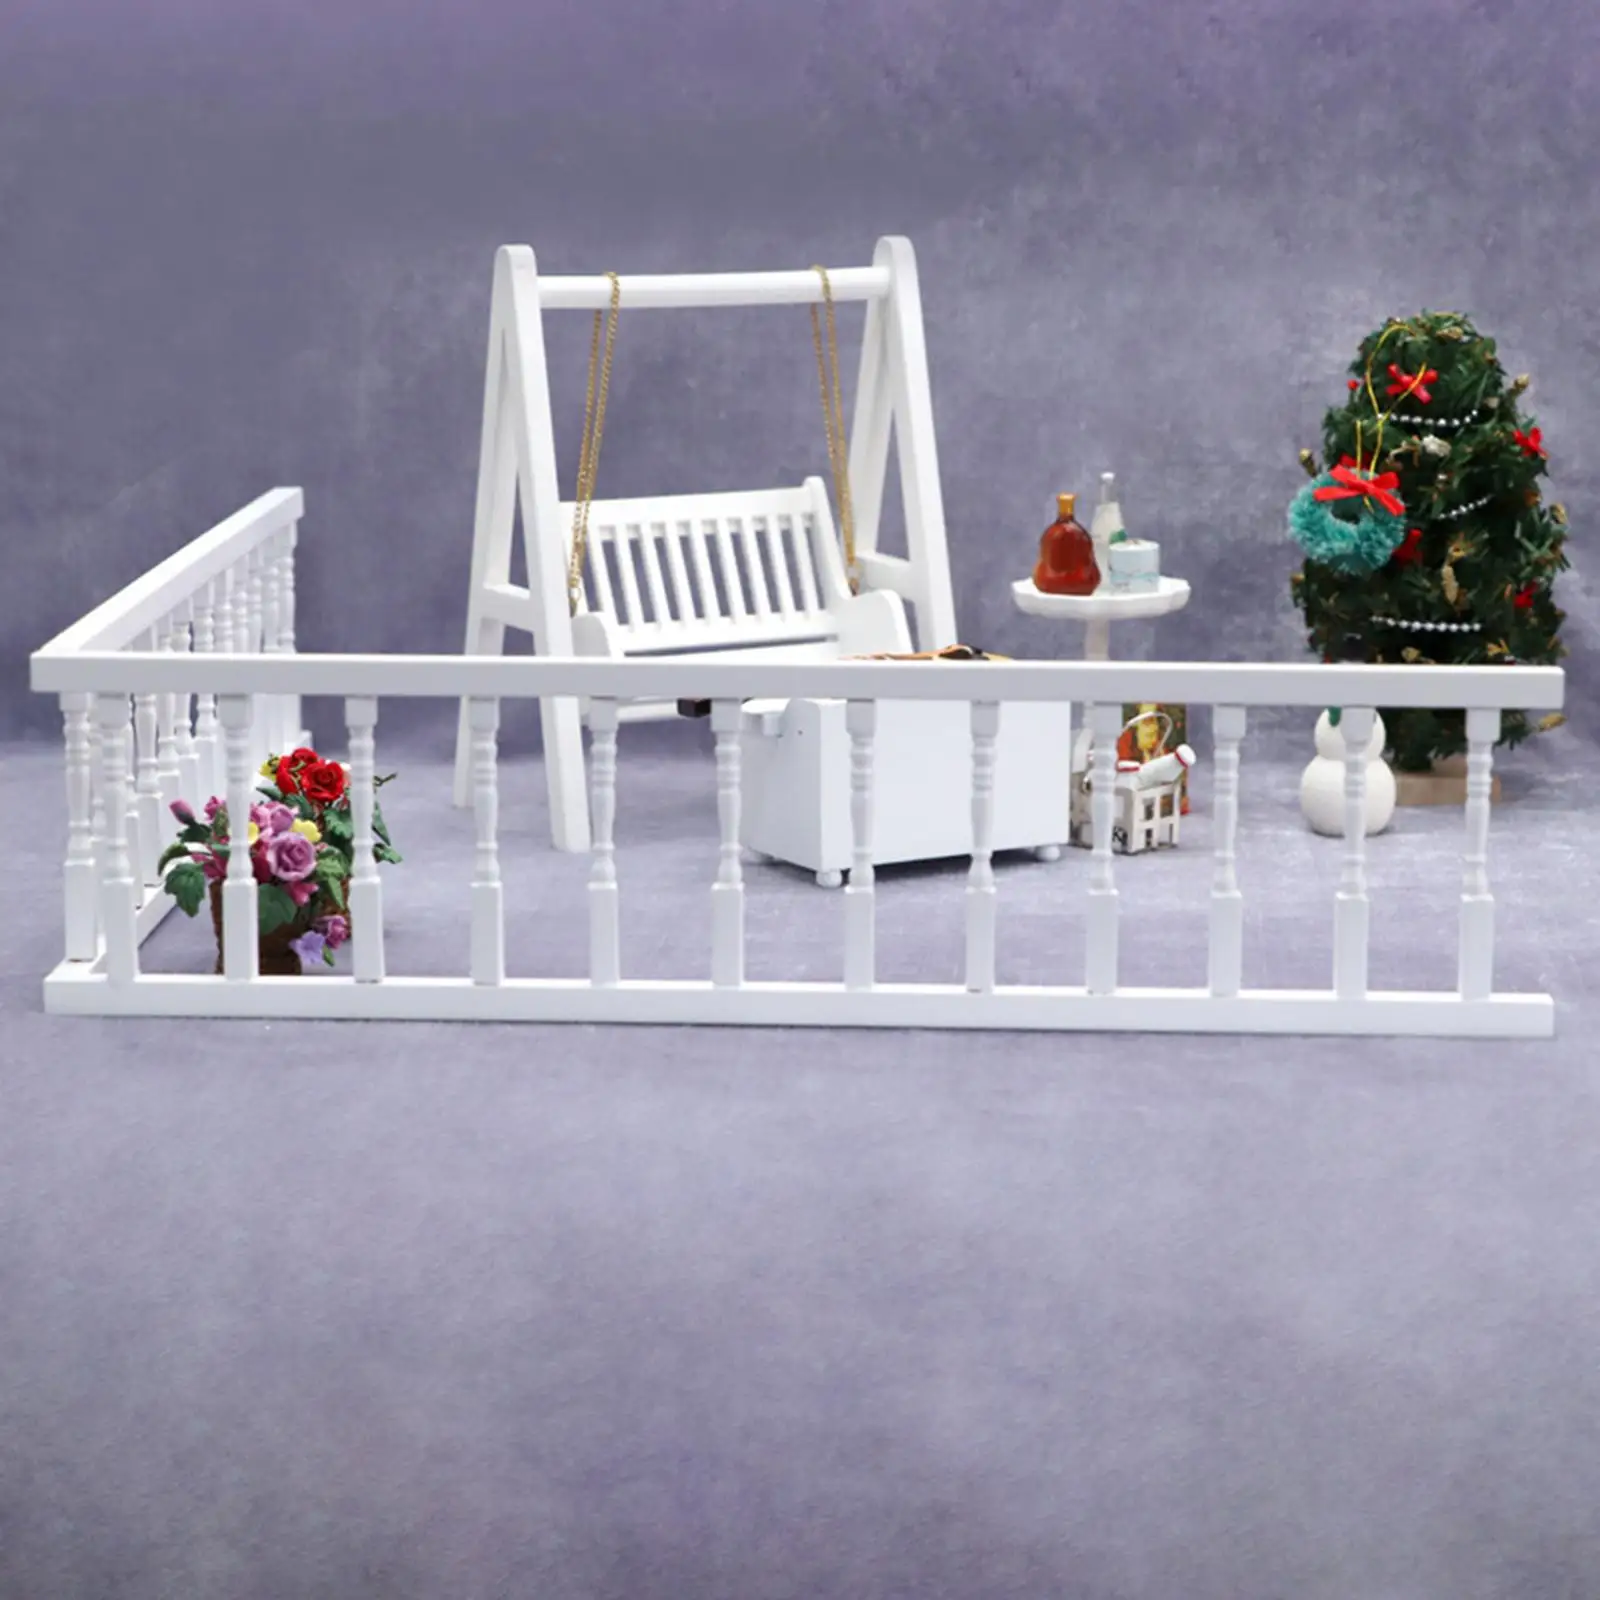 Miniature Wooden Fence Handrail Garden Micro Landscape Accessories 1:12 Scale Dollhouse Railing Decor Scenery Supplies